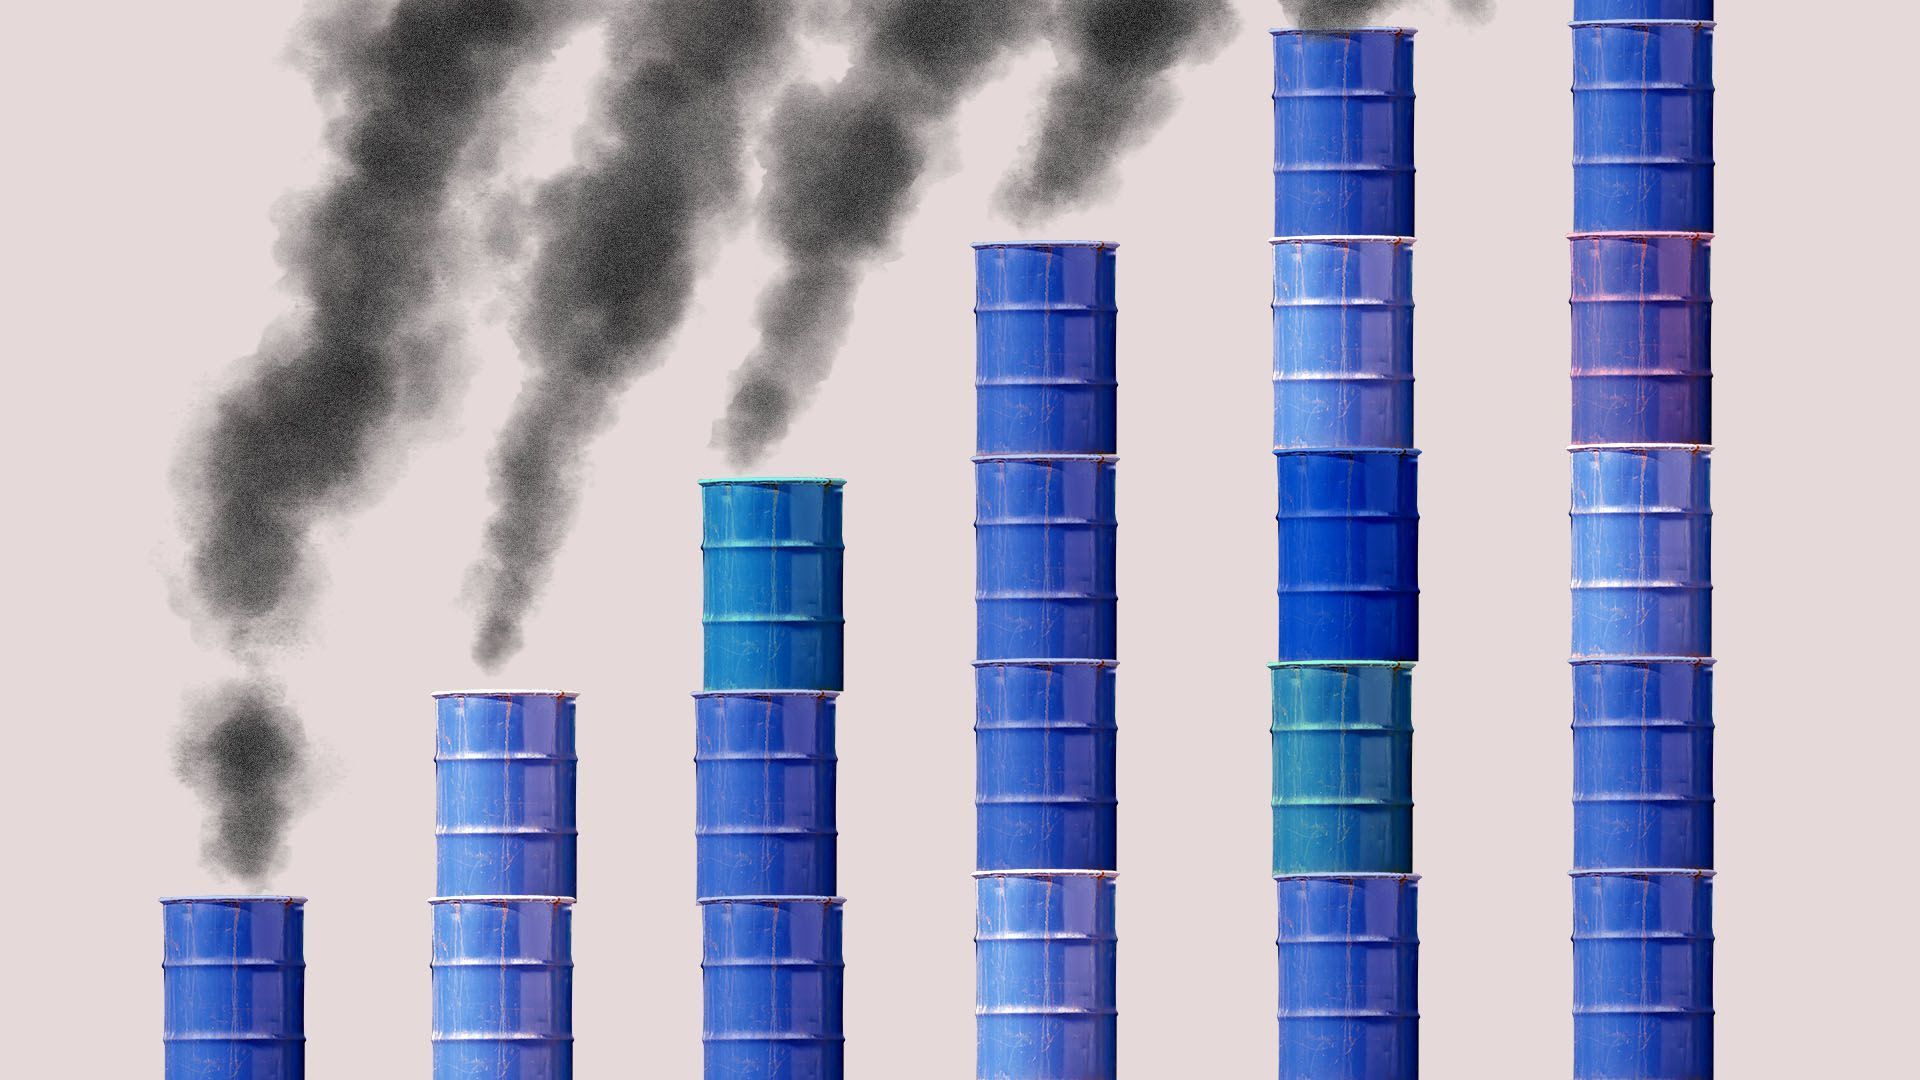 Illustration of oil barrels acting as smoke stacks